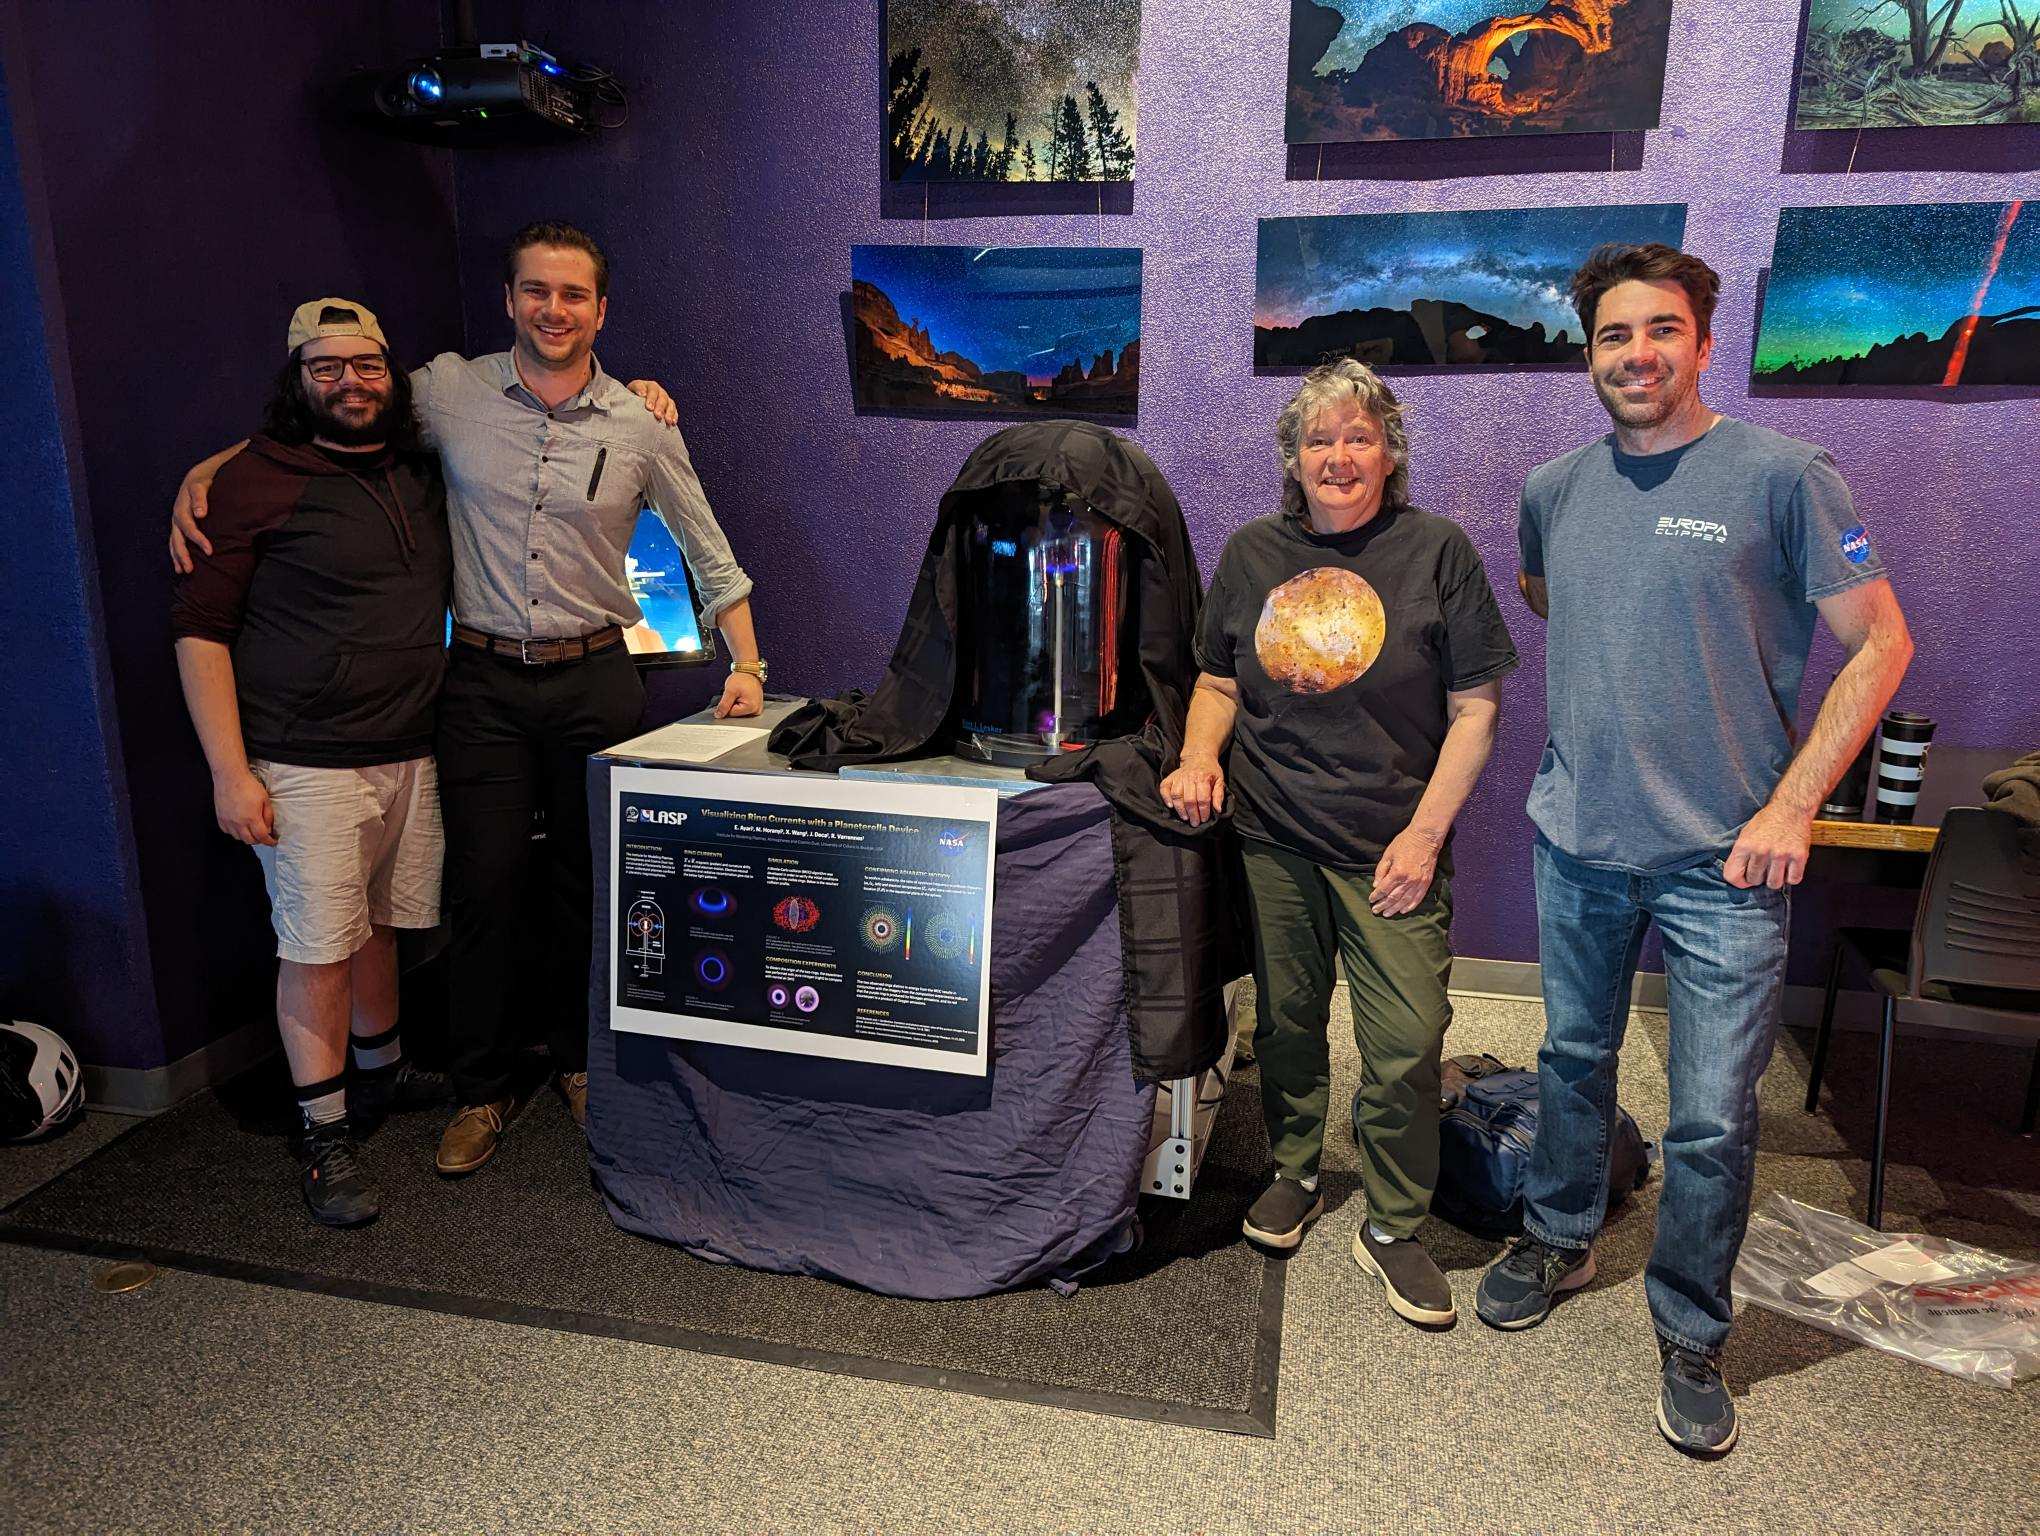 Terrella device demonstration at Fiske Planetarium